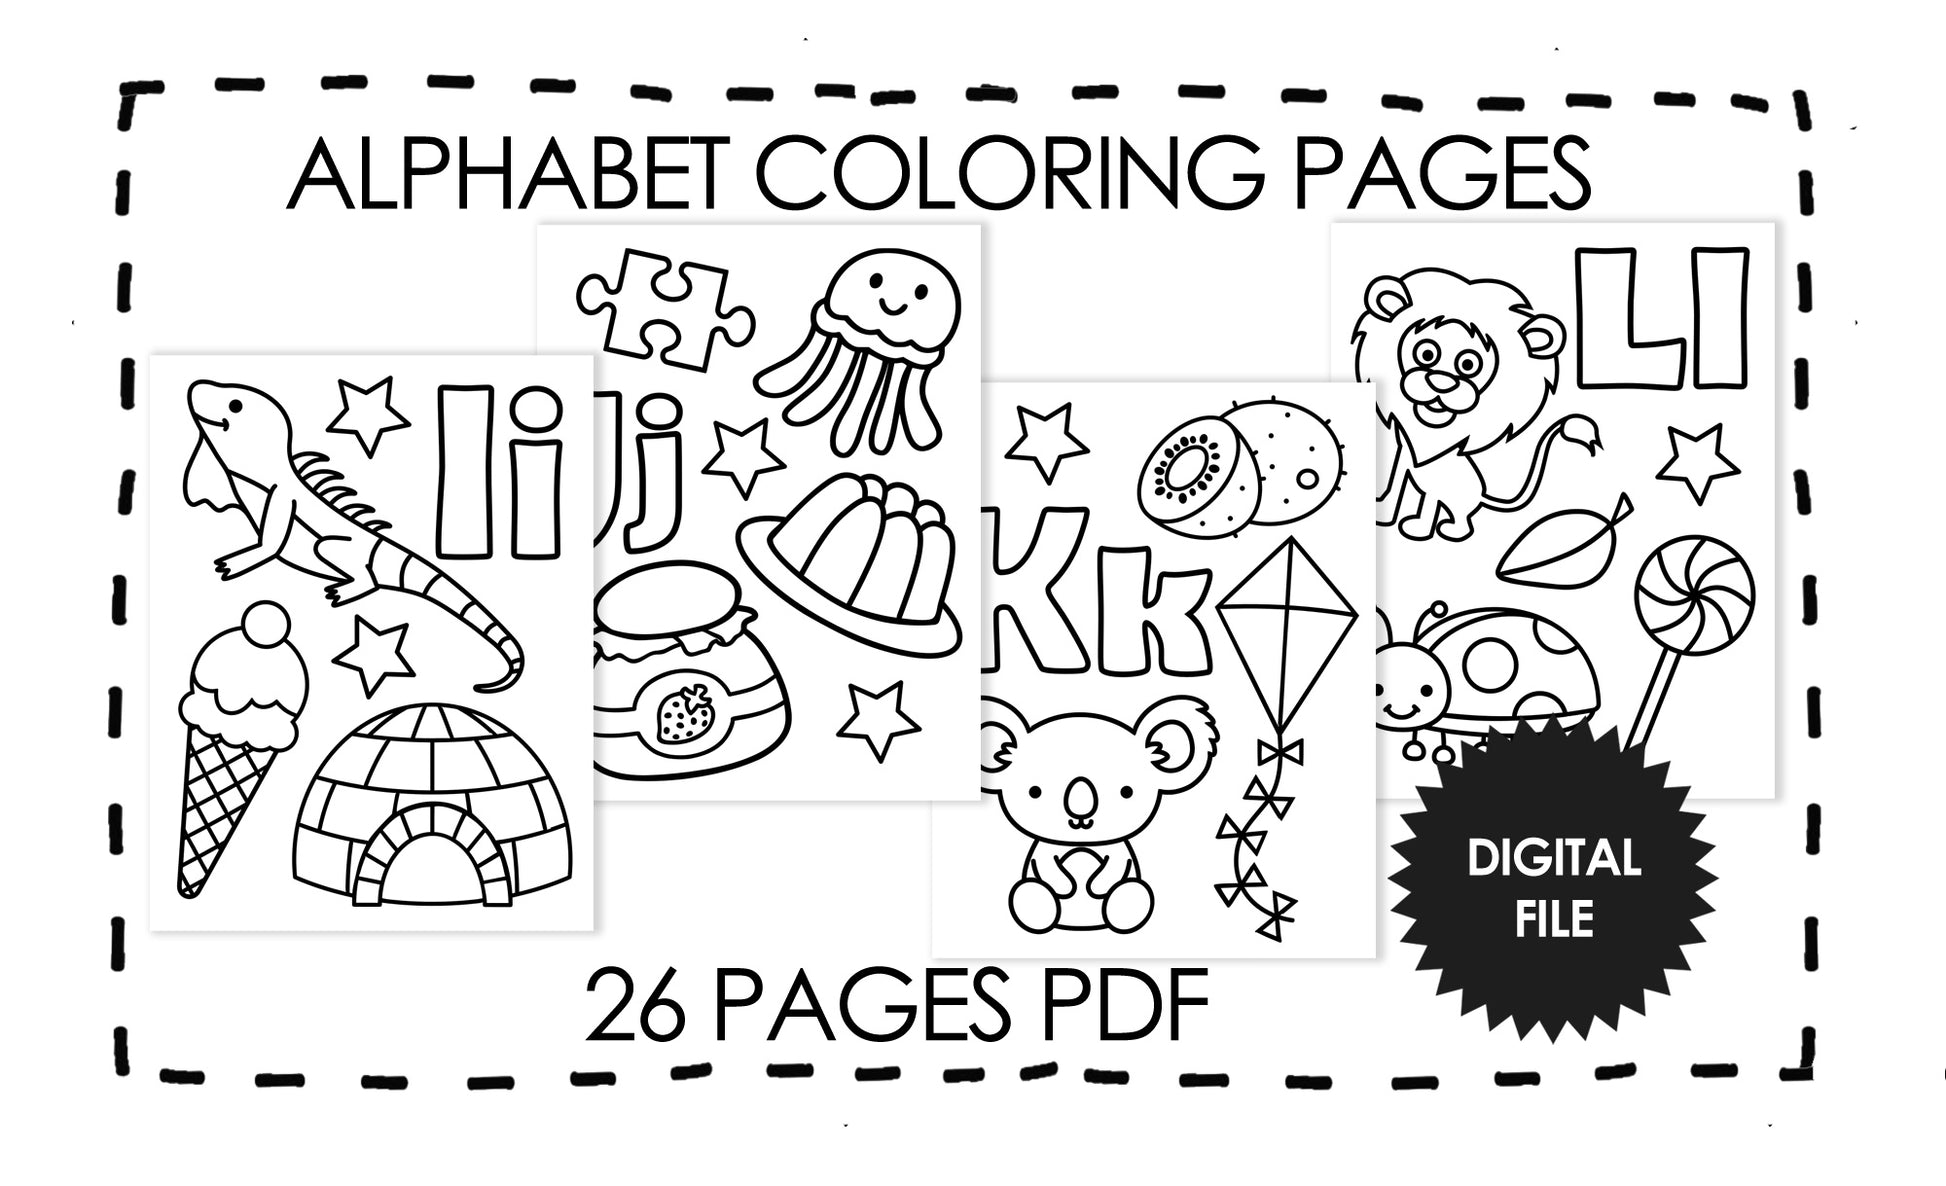 Alphabet coloring pages for kids preschool abc coloring book kids pr â she